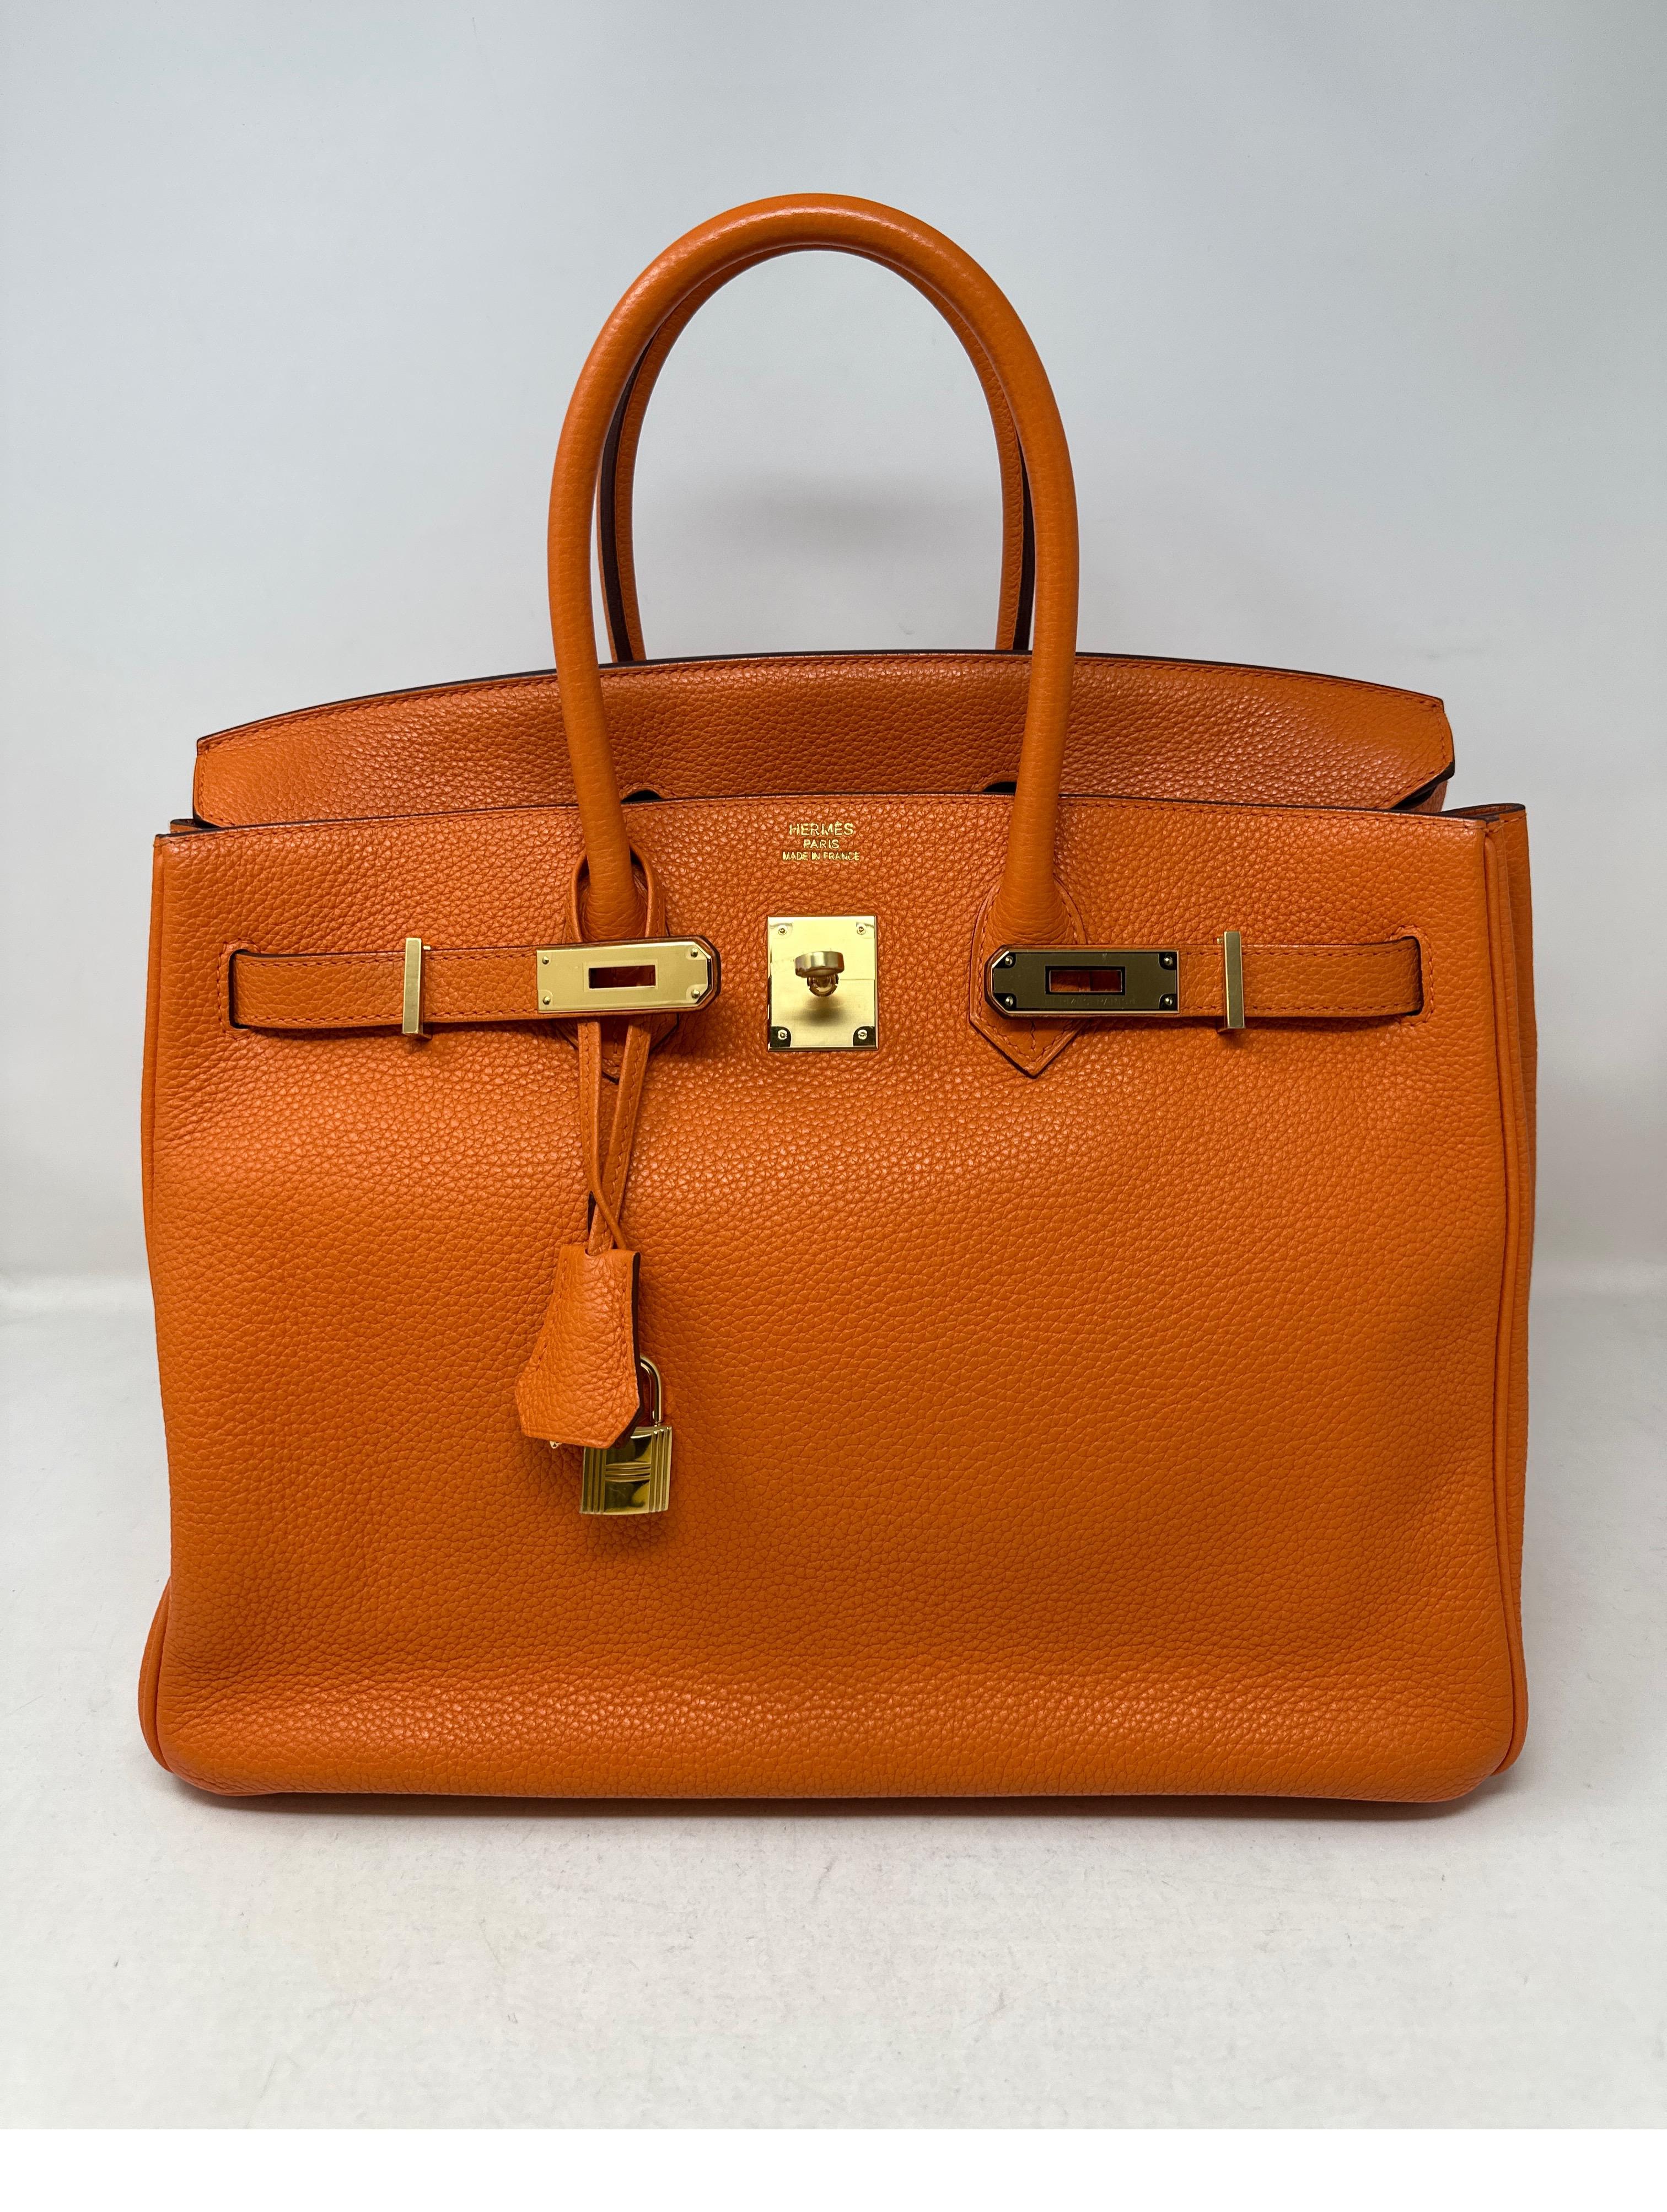 Hermes Orange Birkin 35 Bag. Togo leather. Classic orange color. Gold hardware. Interior clean. Plastic still on hardware. Includes clochette, lock, keys, and dust bag. Guaranteed authentic. 